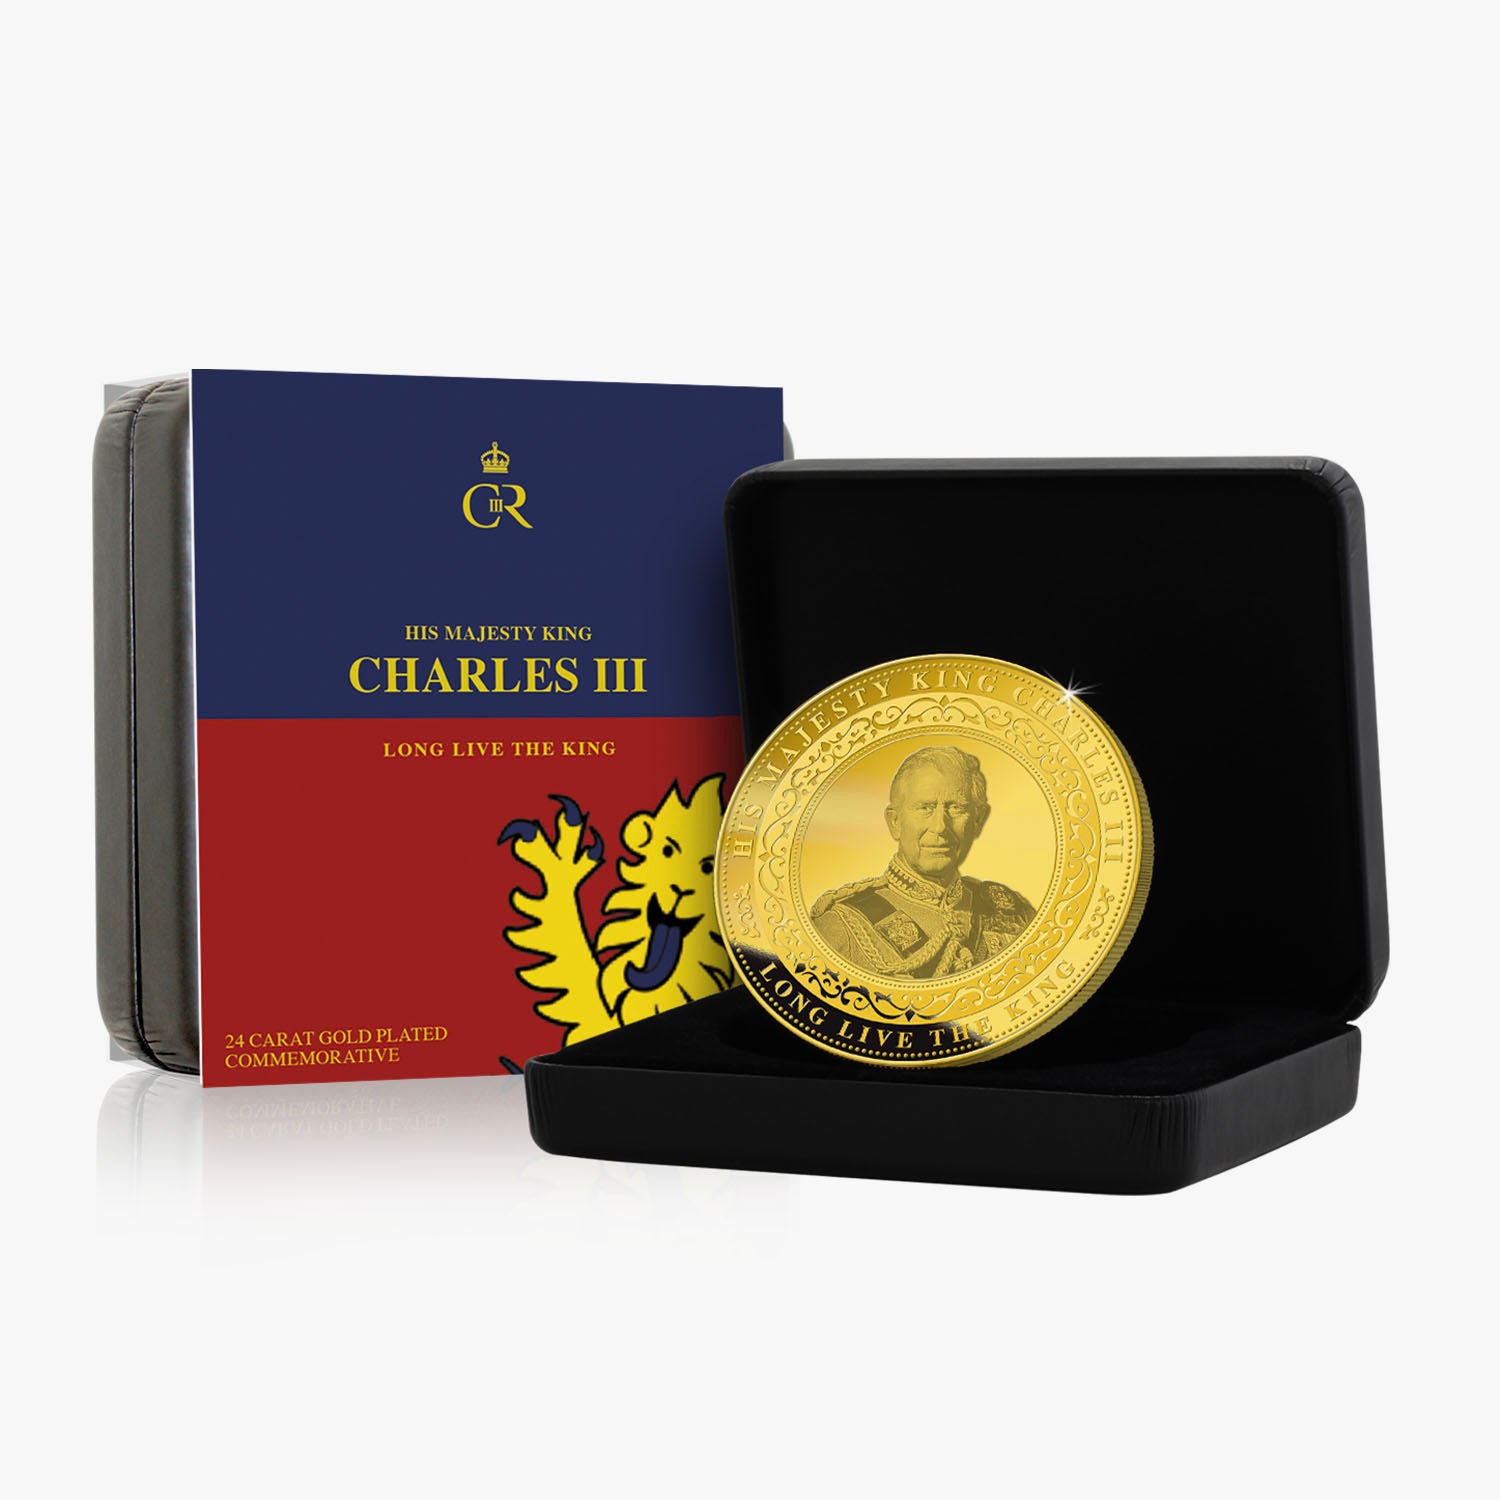 L'accession du roi Charles III Gold Edition Commémorative